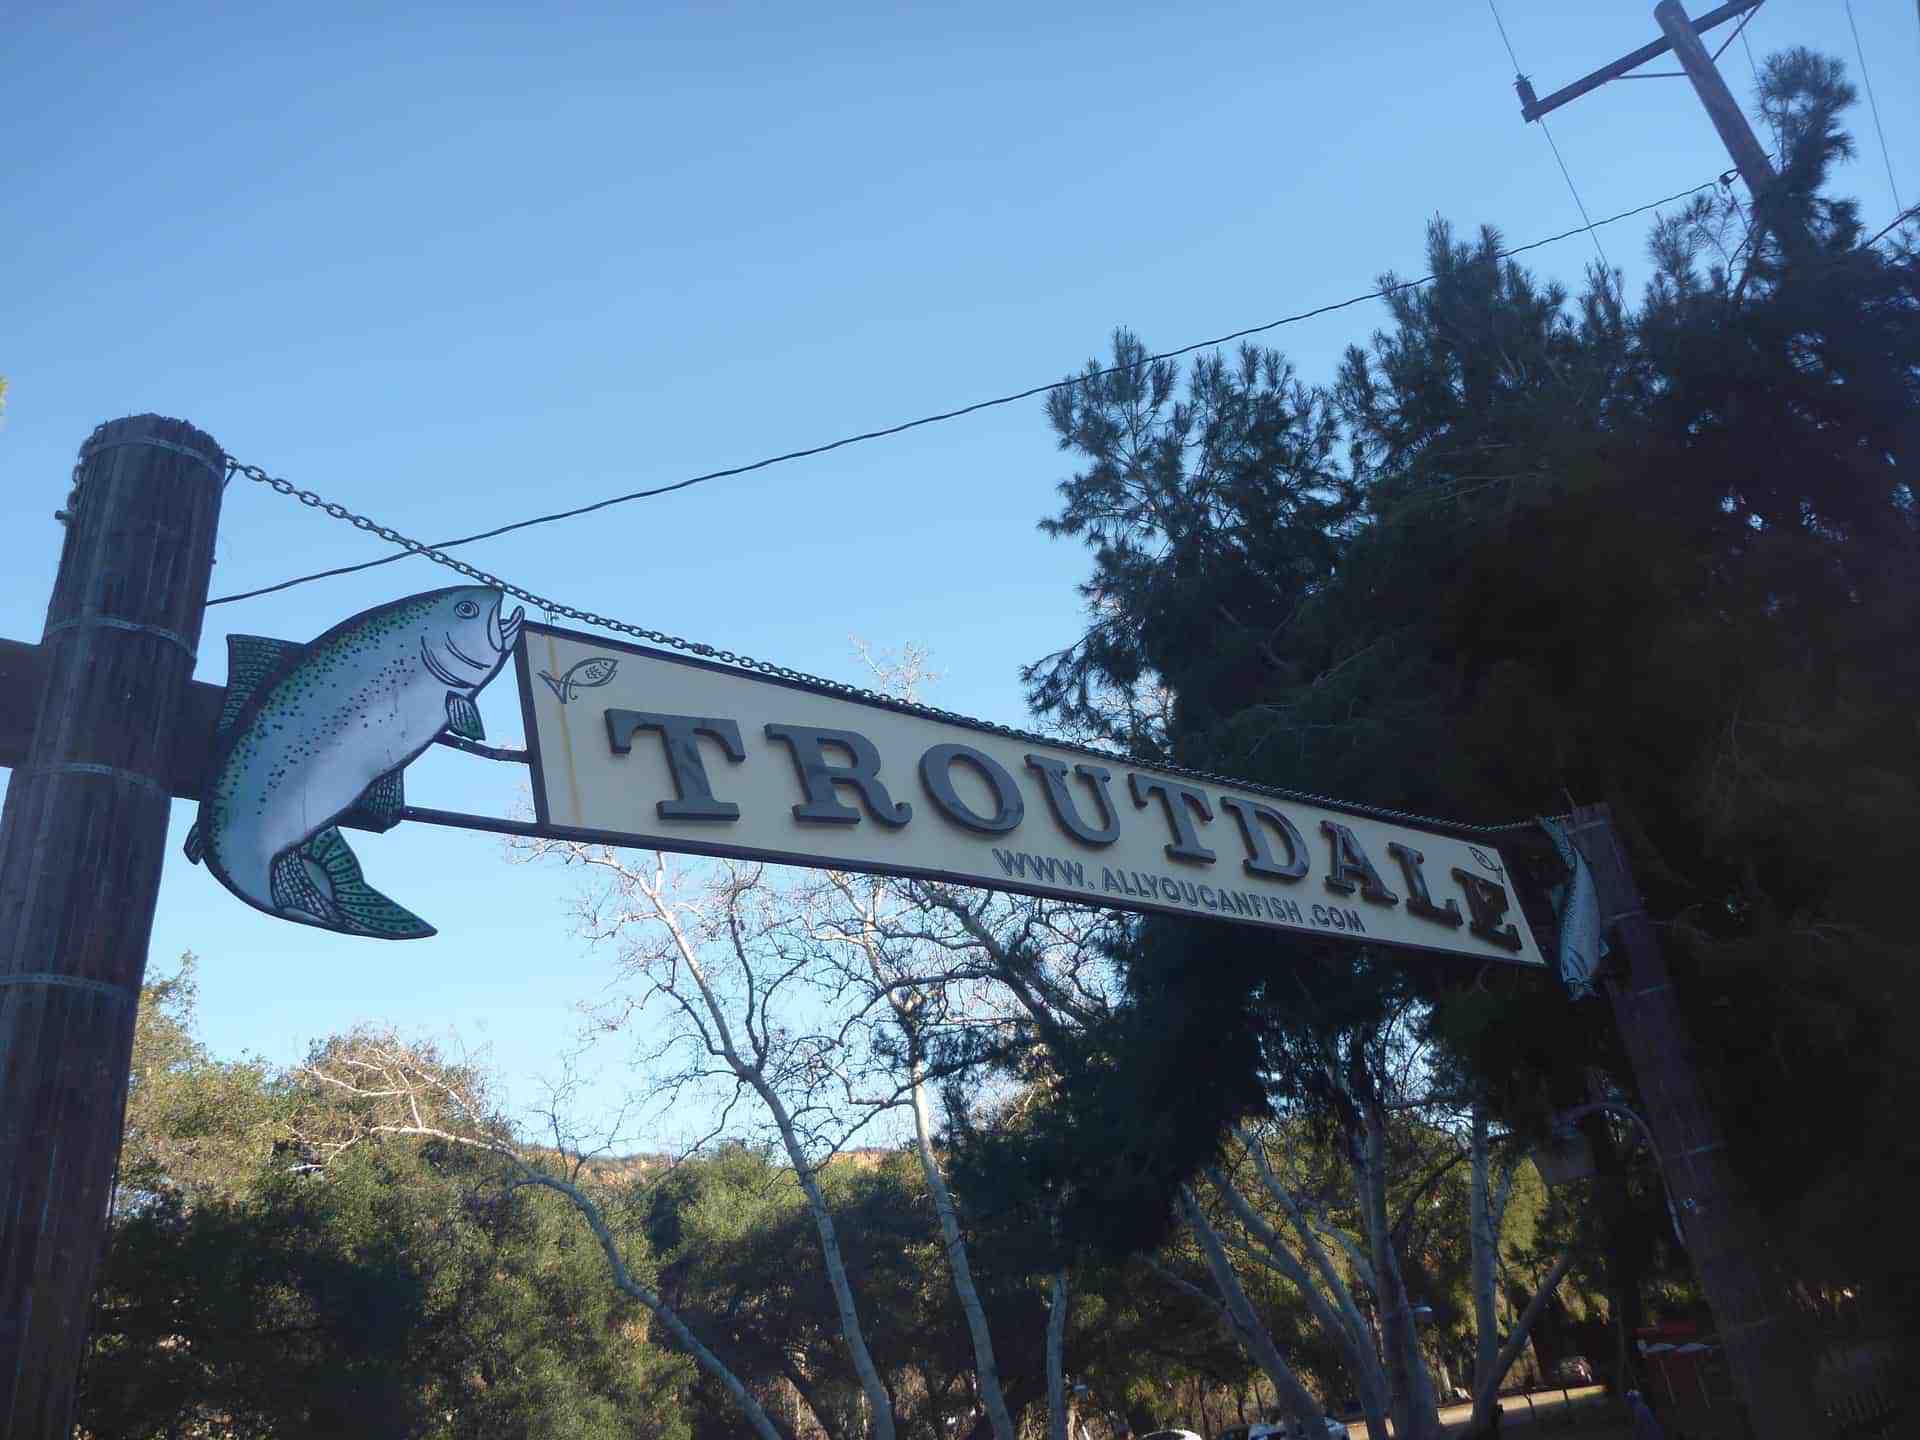 Troutdale - Agoura Hills, CA - Retro Roadmap